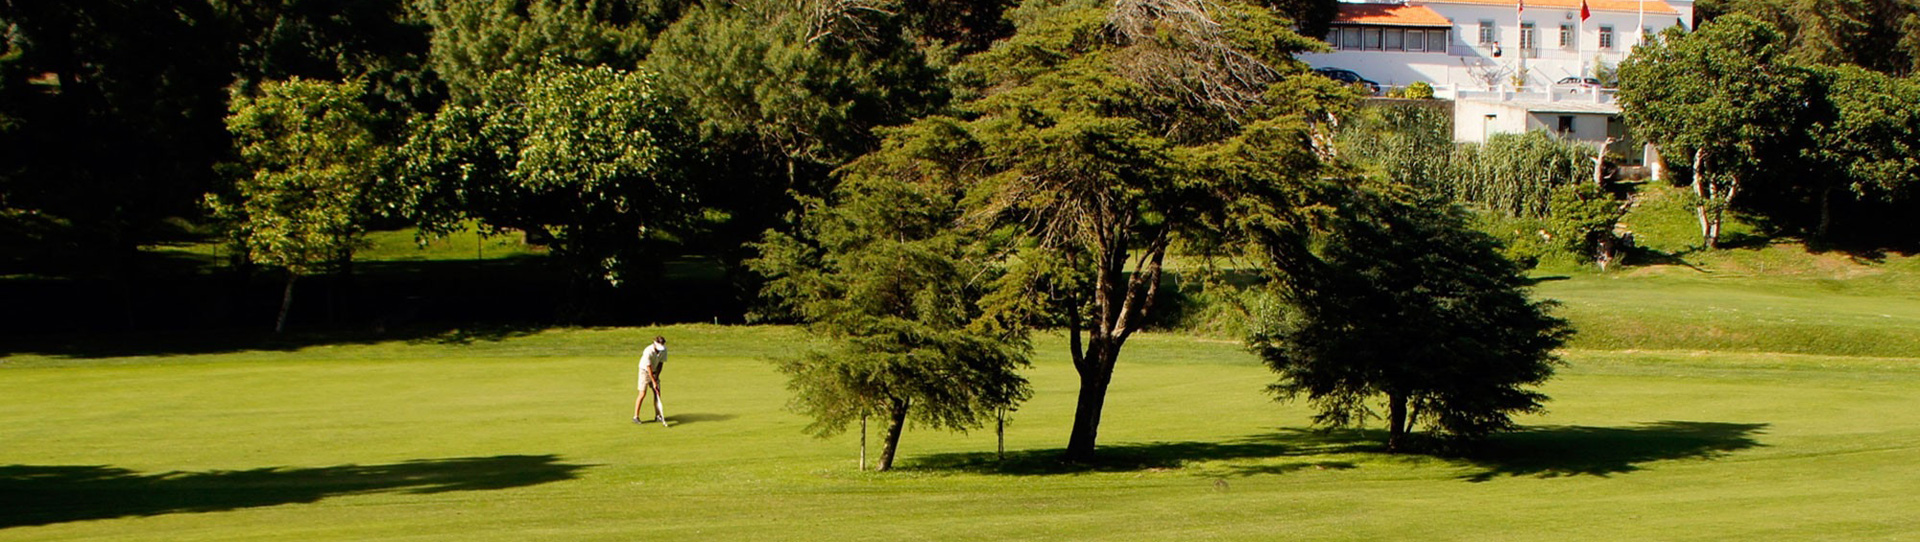 Portugal golf courses - Lisbon Sports Club - Photo 2